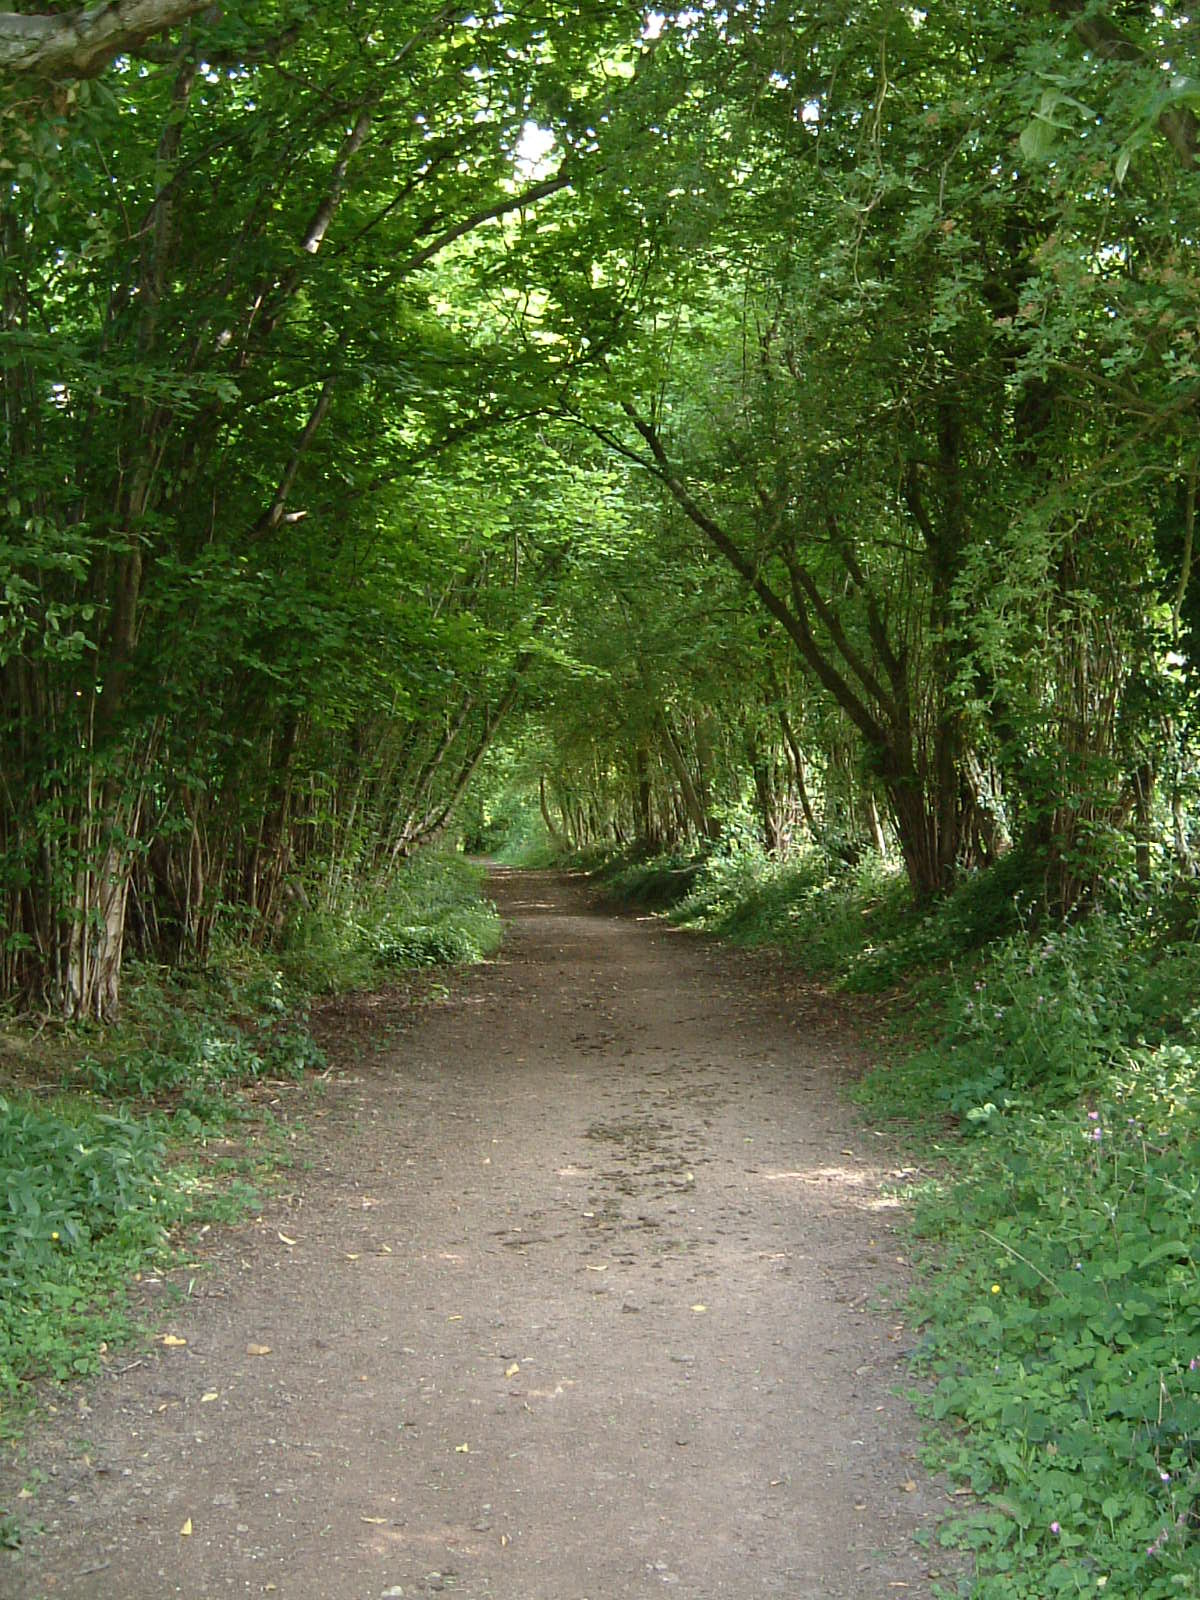 The bridleway to Moorend